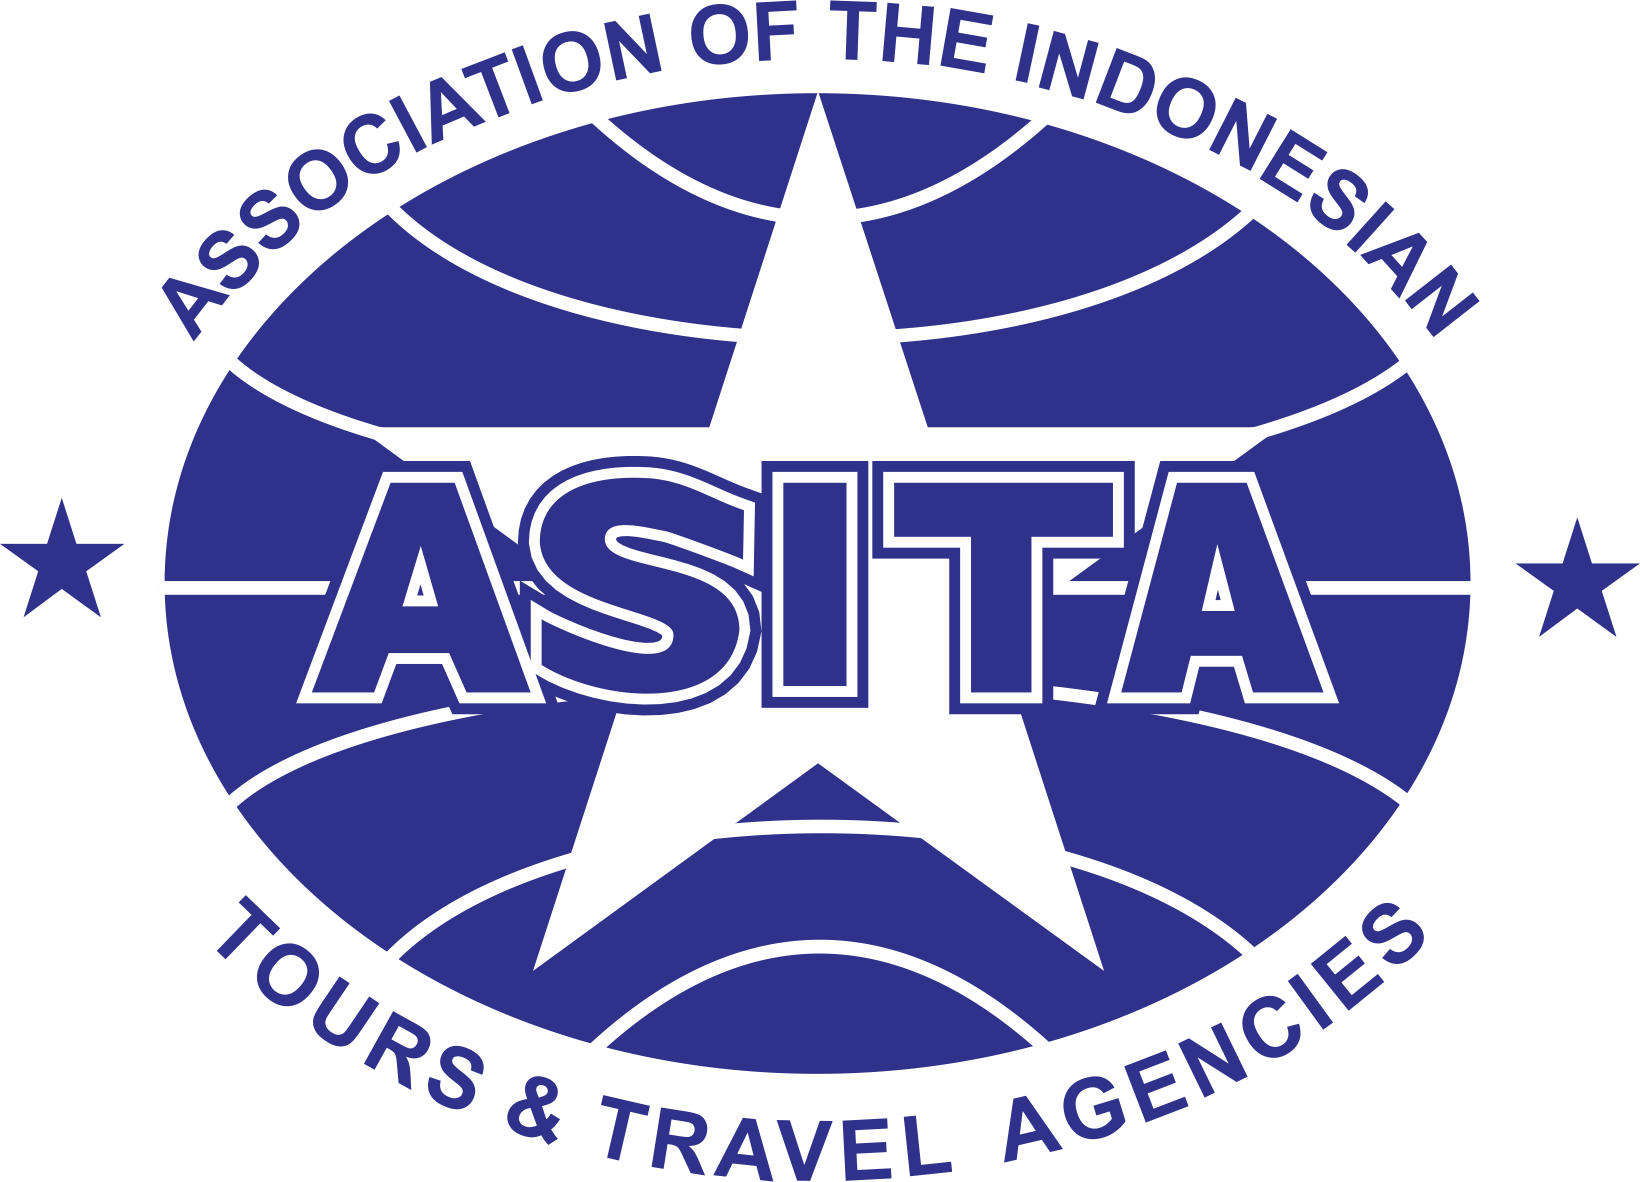 indonesian travel agent